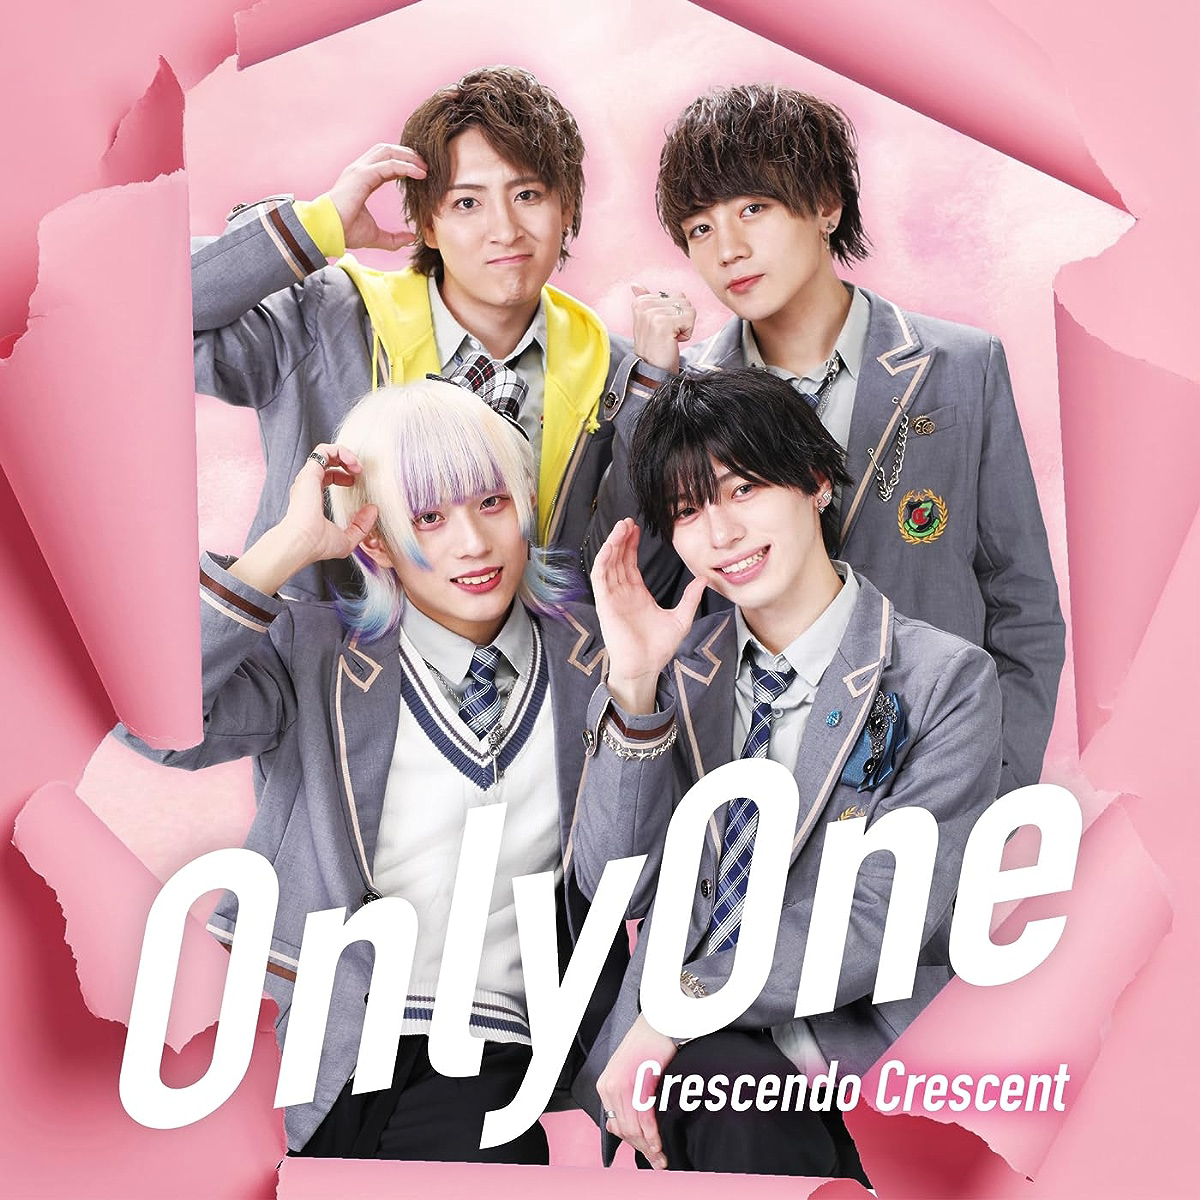 Crescendo Crescent - Only One Cover